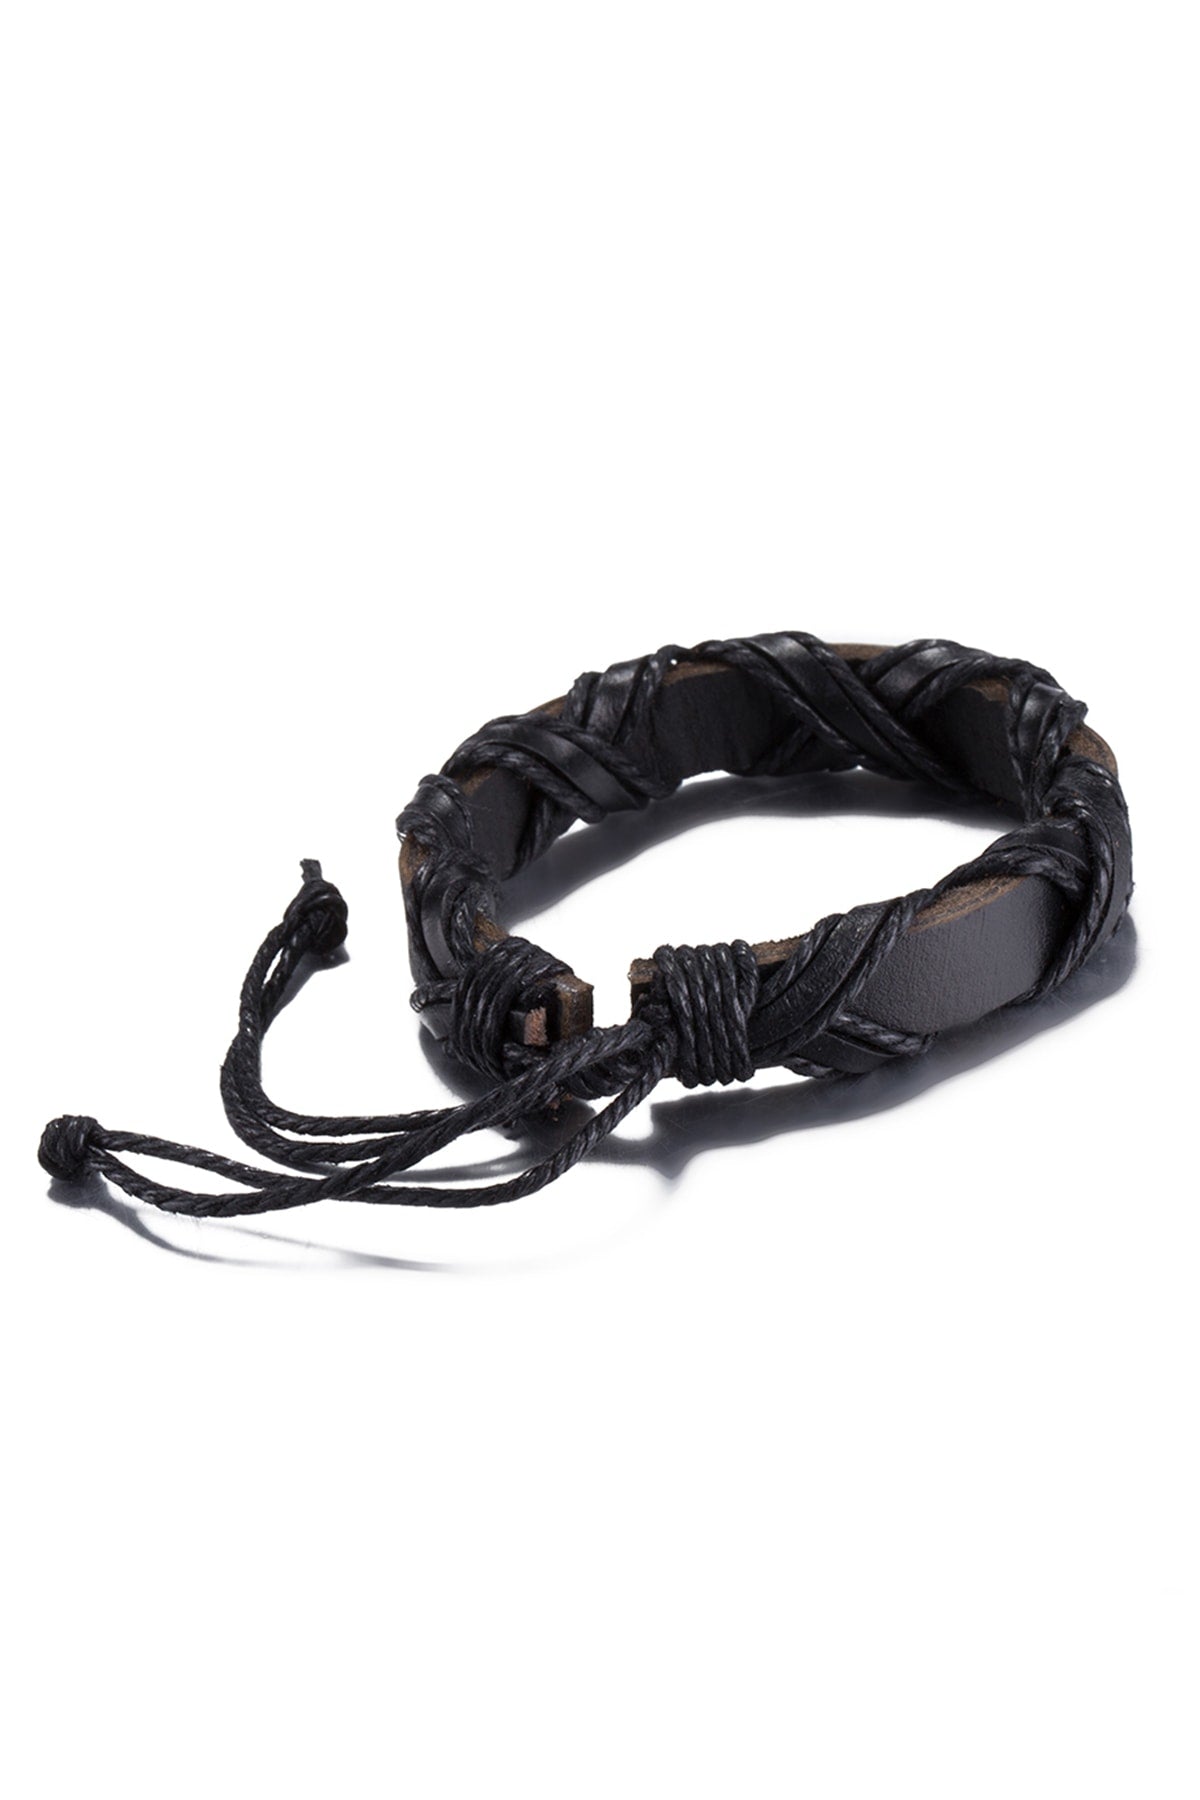 Rubique Black Leather Infinity Wrap Bracelet